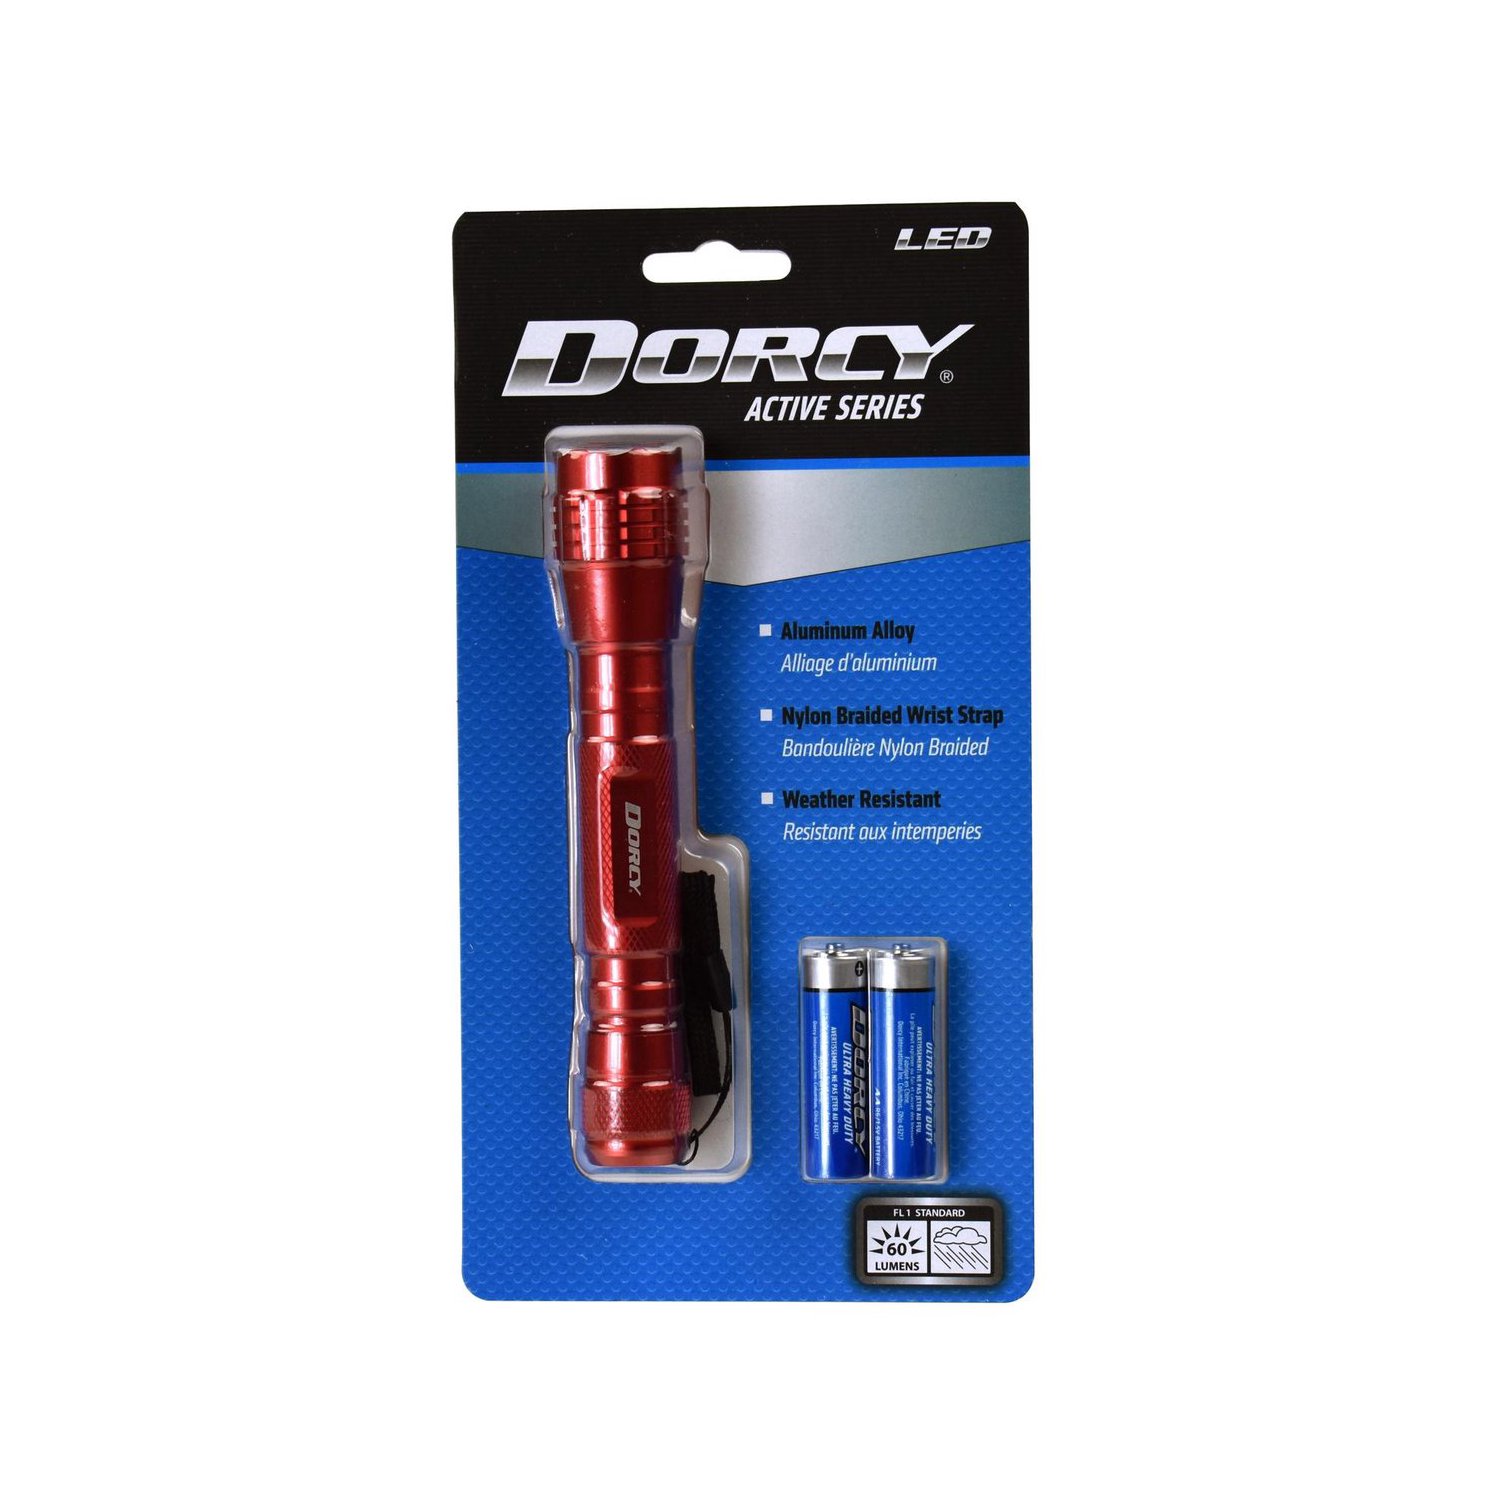 Dorcy 125 Lumen Compact Floating Flashlight